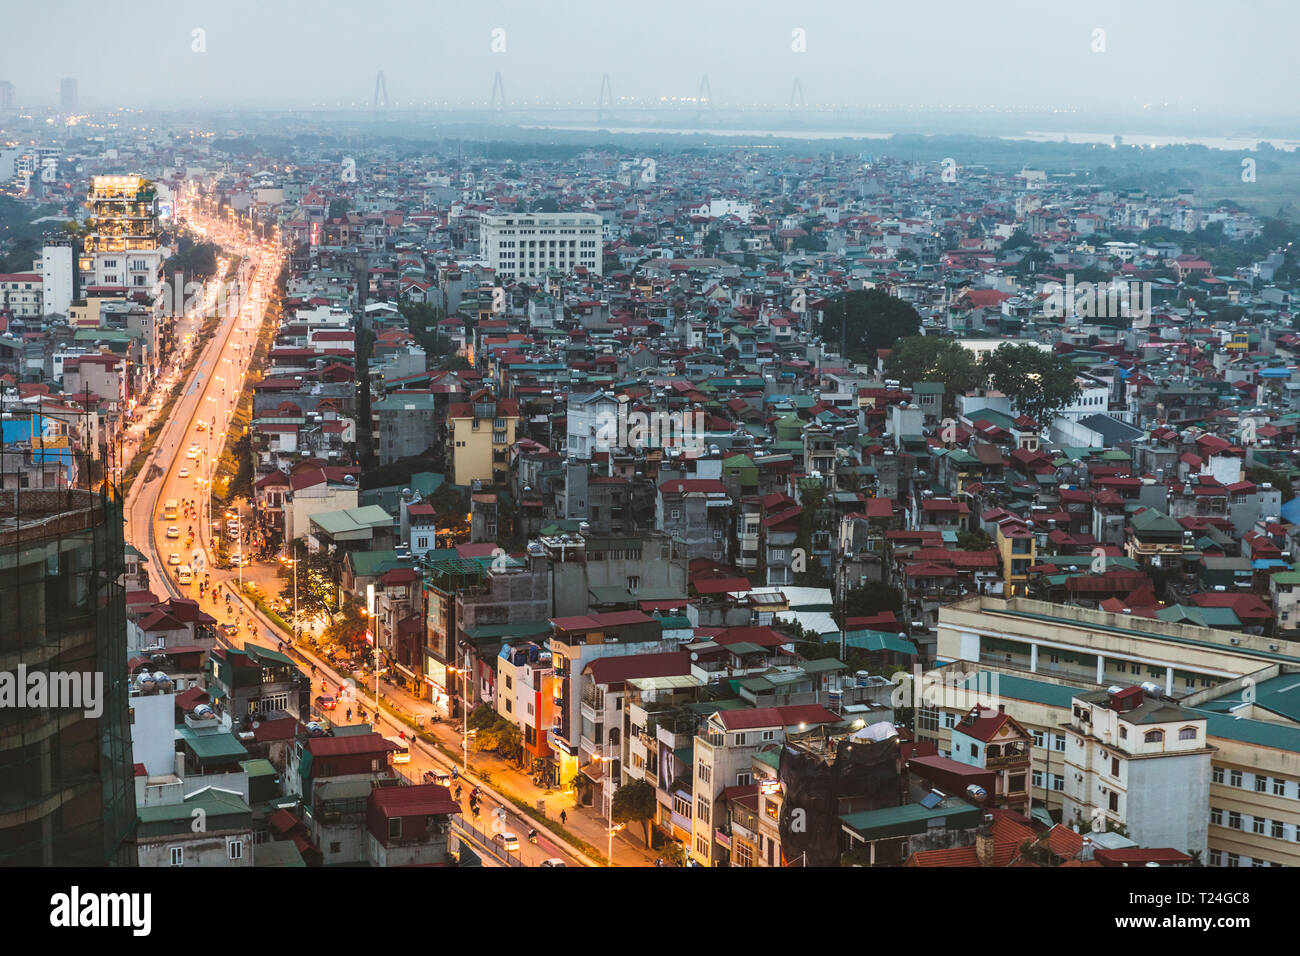 Vietnam, Hanoi, panoramic view of the city at dusk, with illuminated main road and dark residential areas Stock Photo